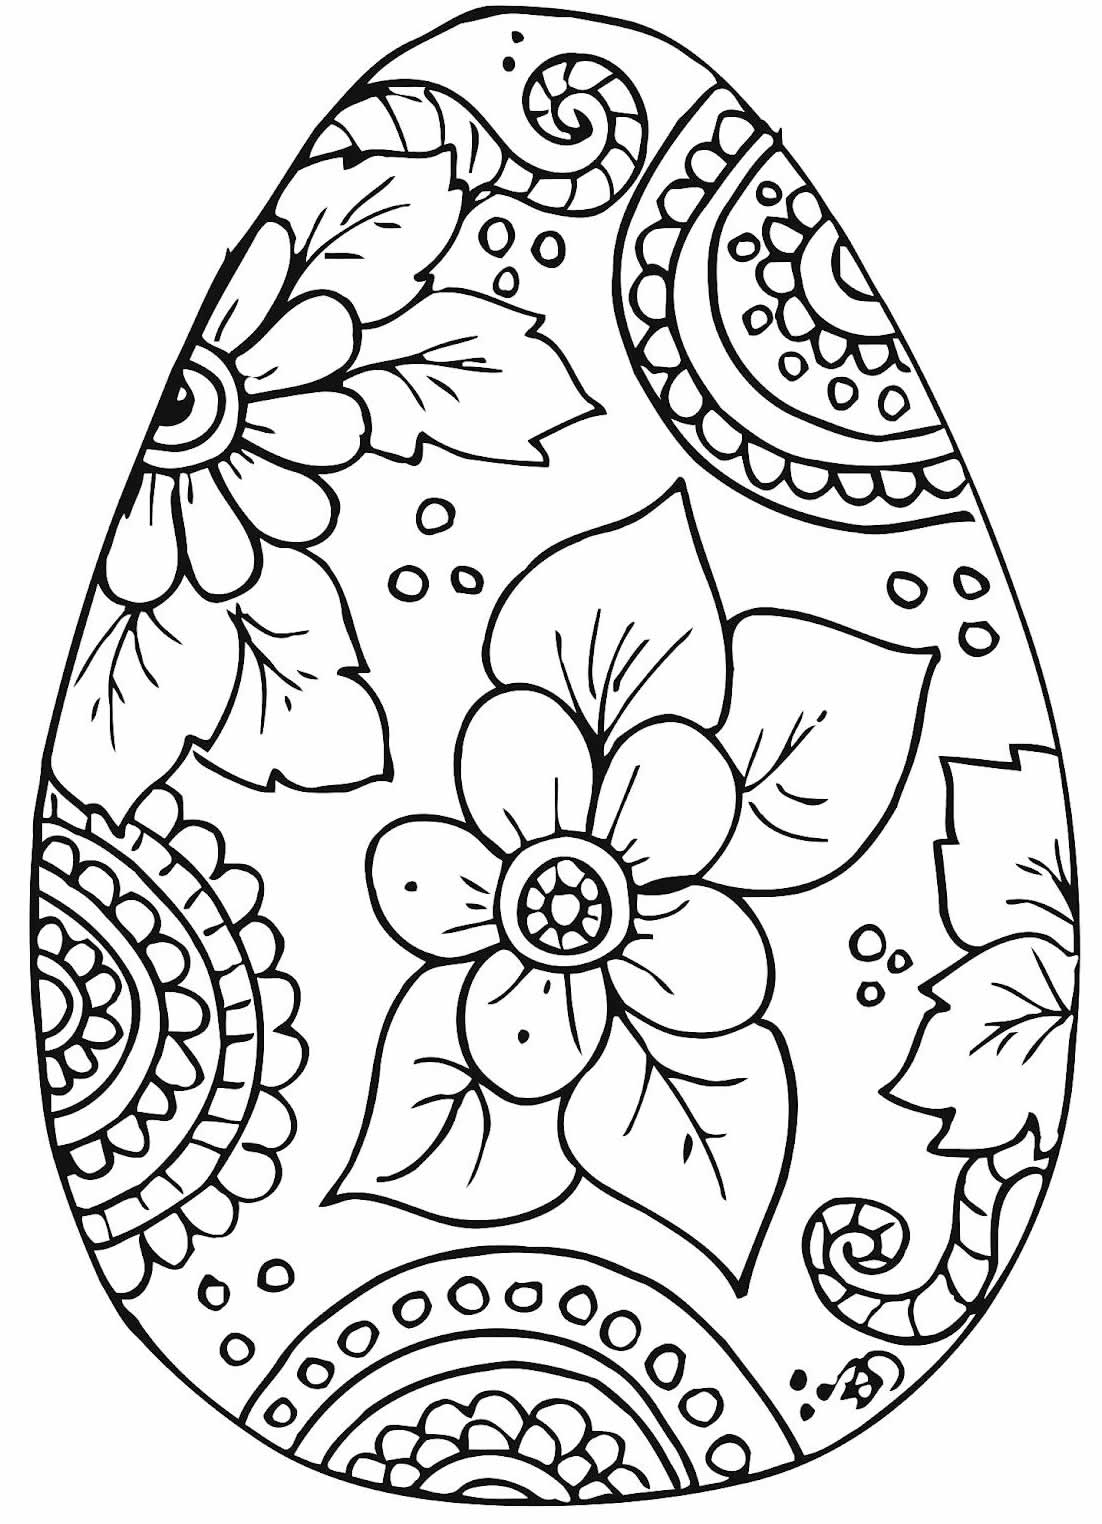 30) Desenho para colorir de páscoa.